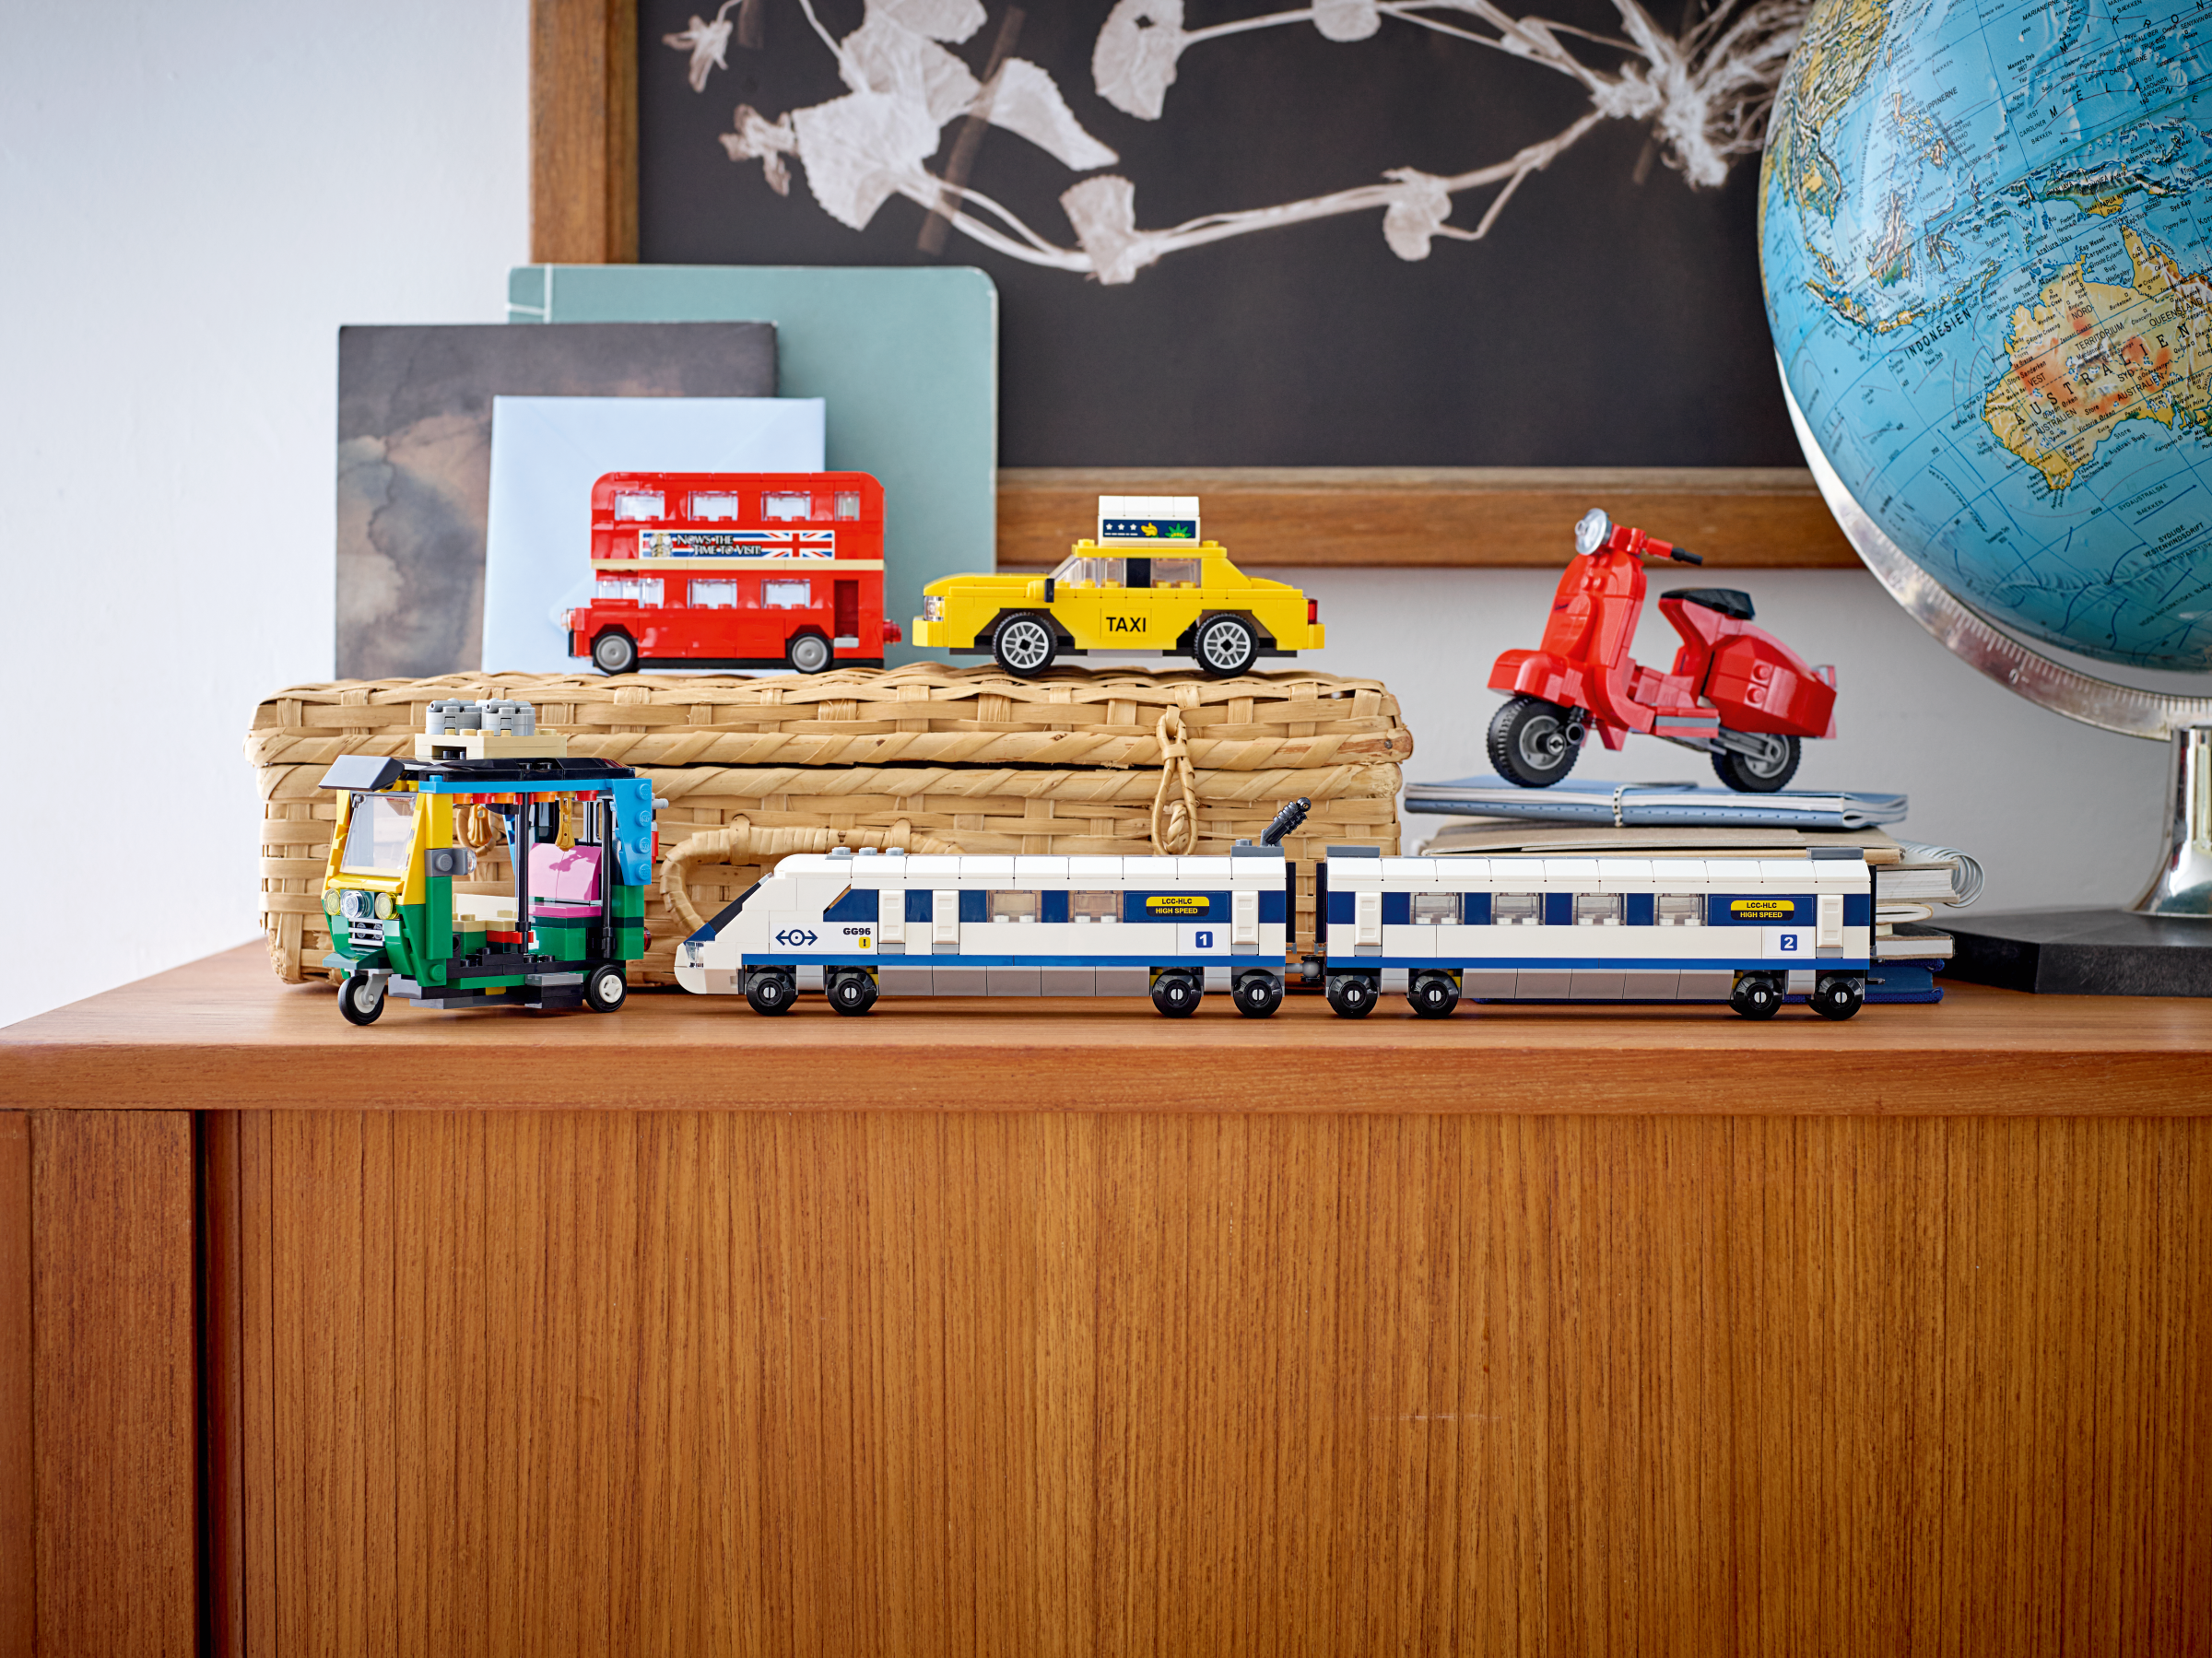 Lego Creator 40518 Le train à grande vitesse